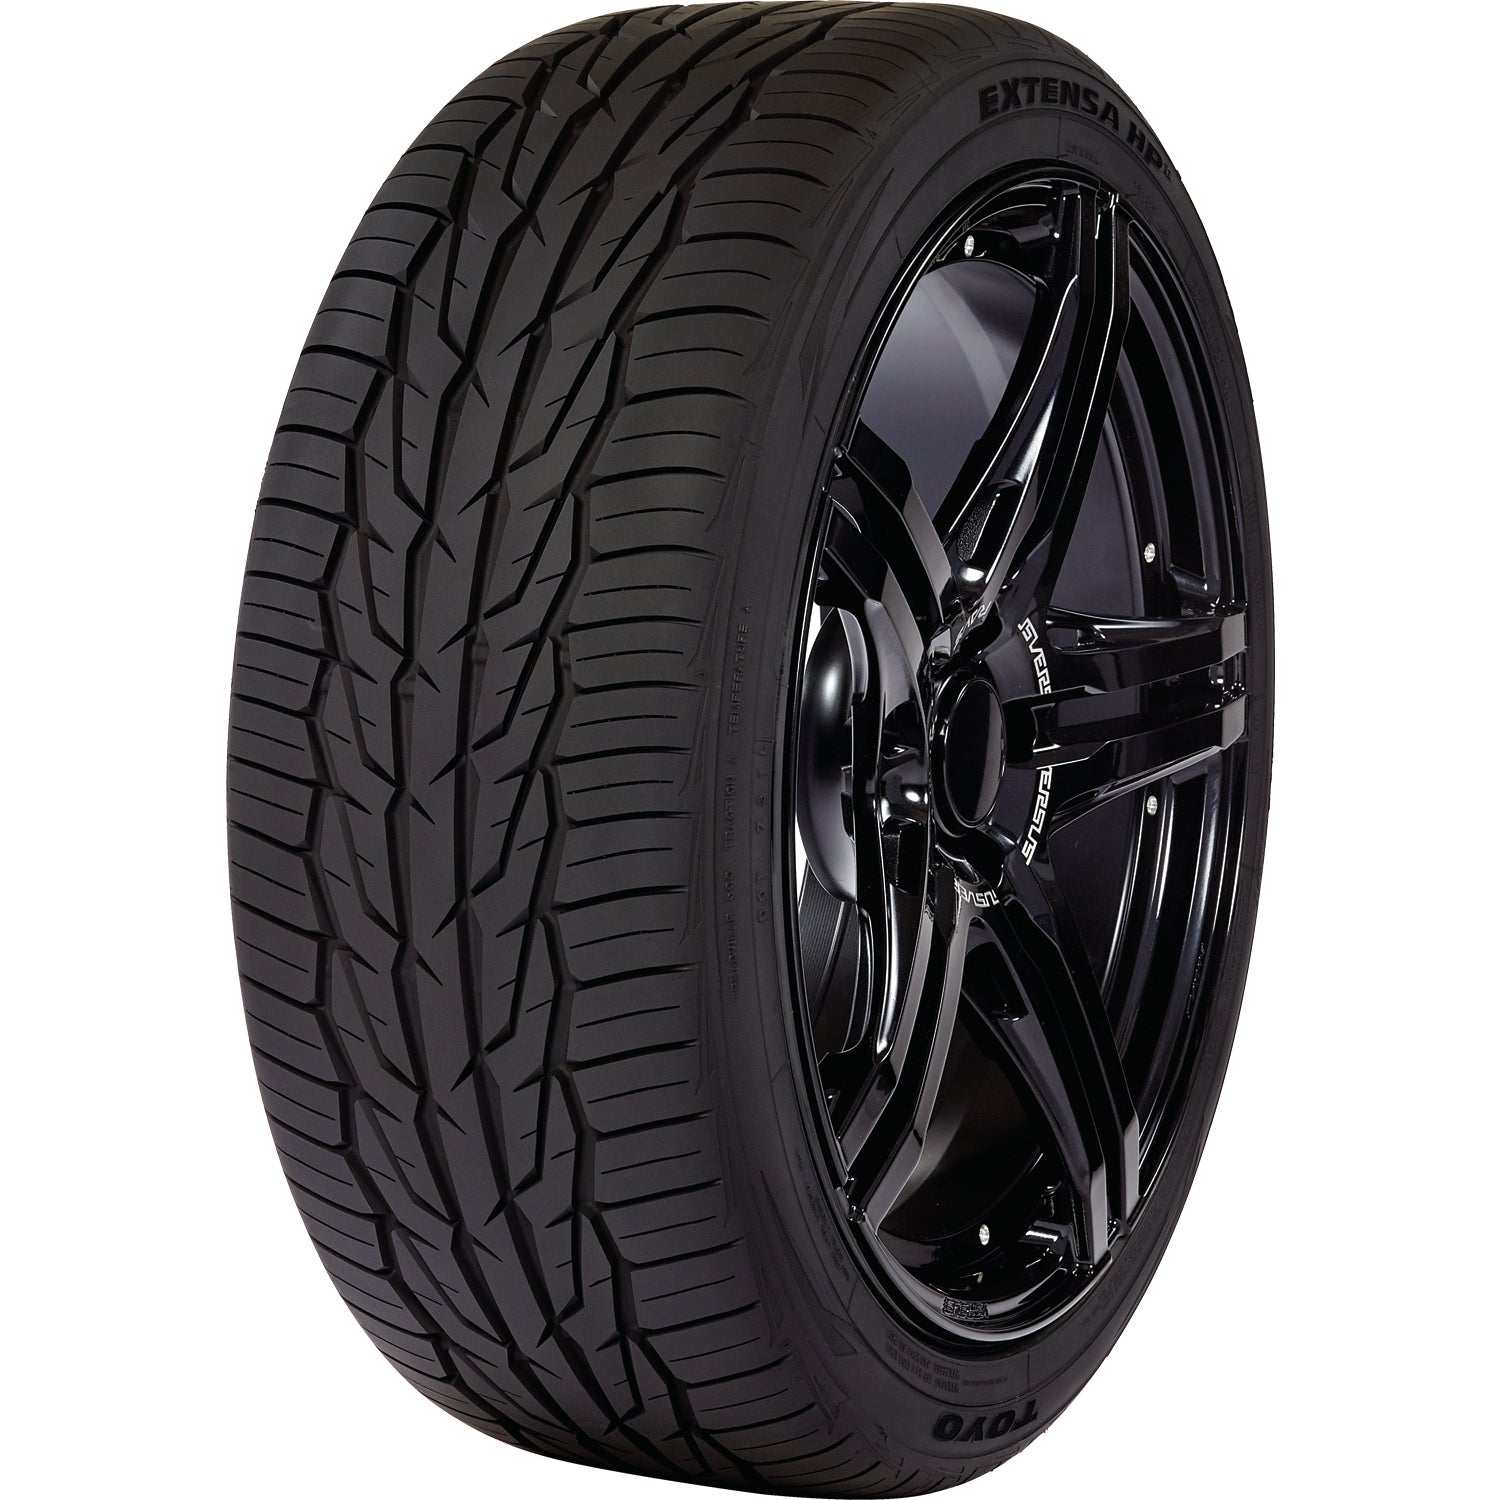 TOYO TIRES EXTENSA HP II 215/45R17 (24.6X8.4R 17) Tires